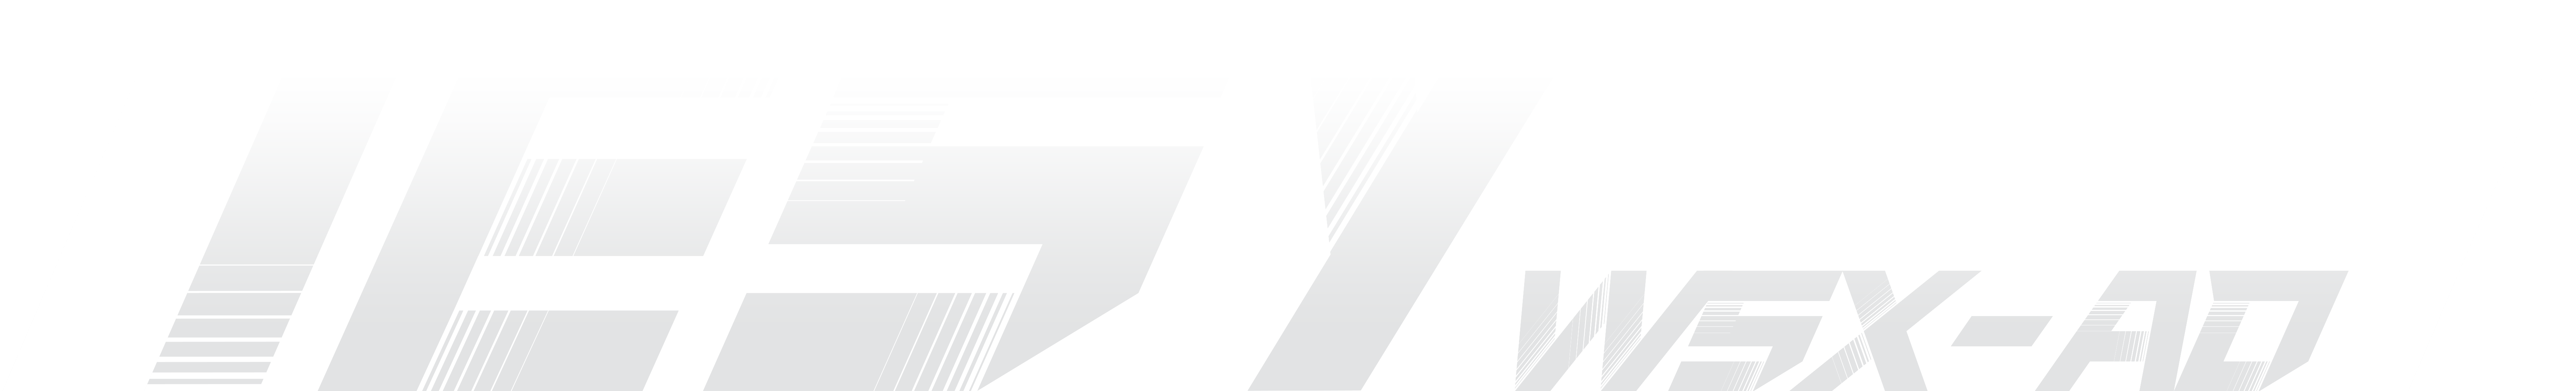 iesy logo